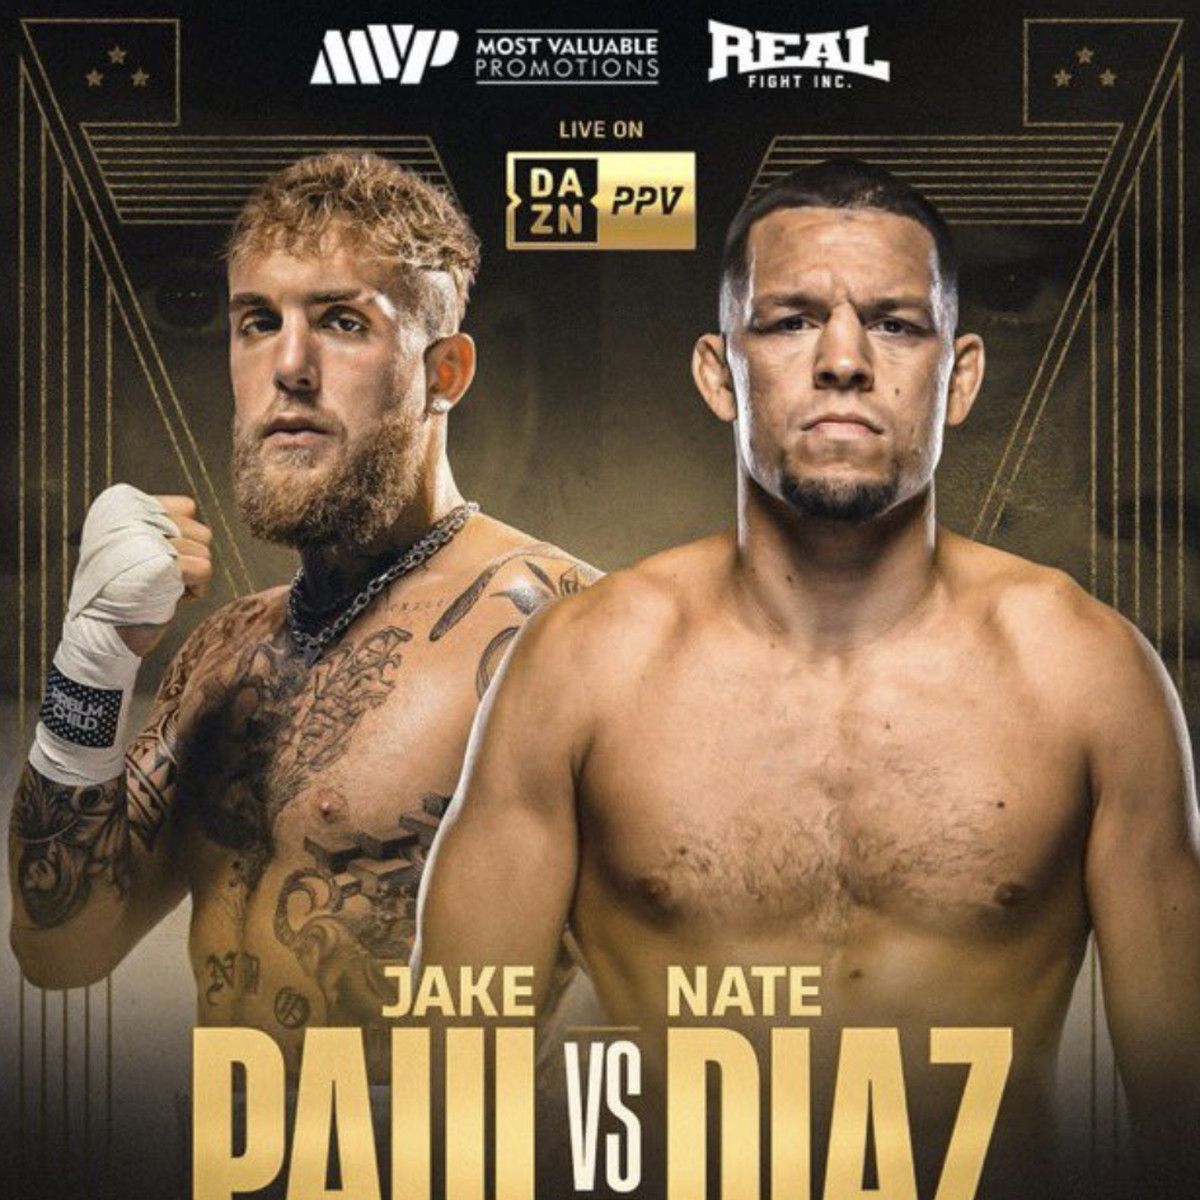 Jake Paul vs Nate Diaz Live Streaming How To Watch Paul vs Diaz Boxing Fight Tonight?